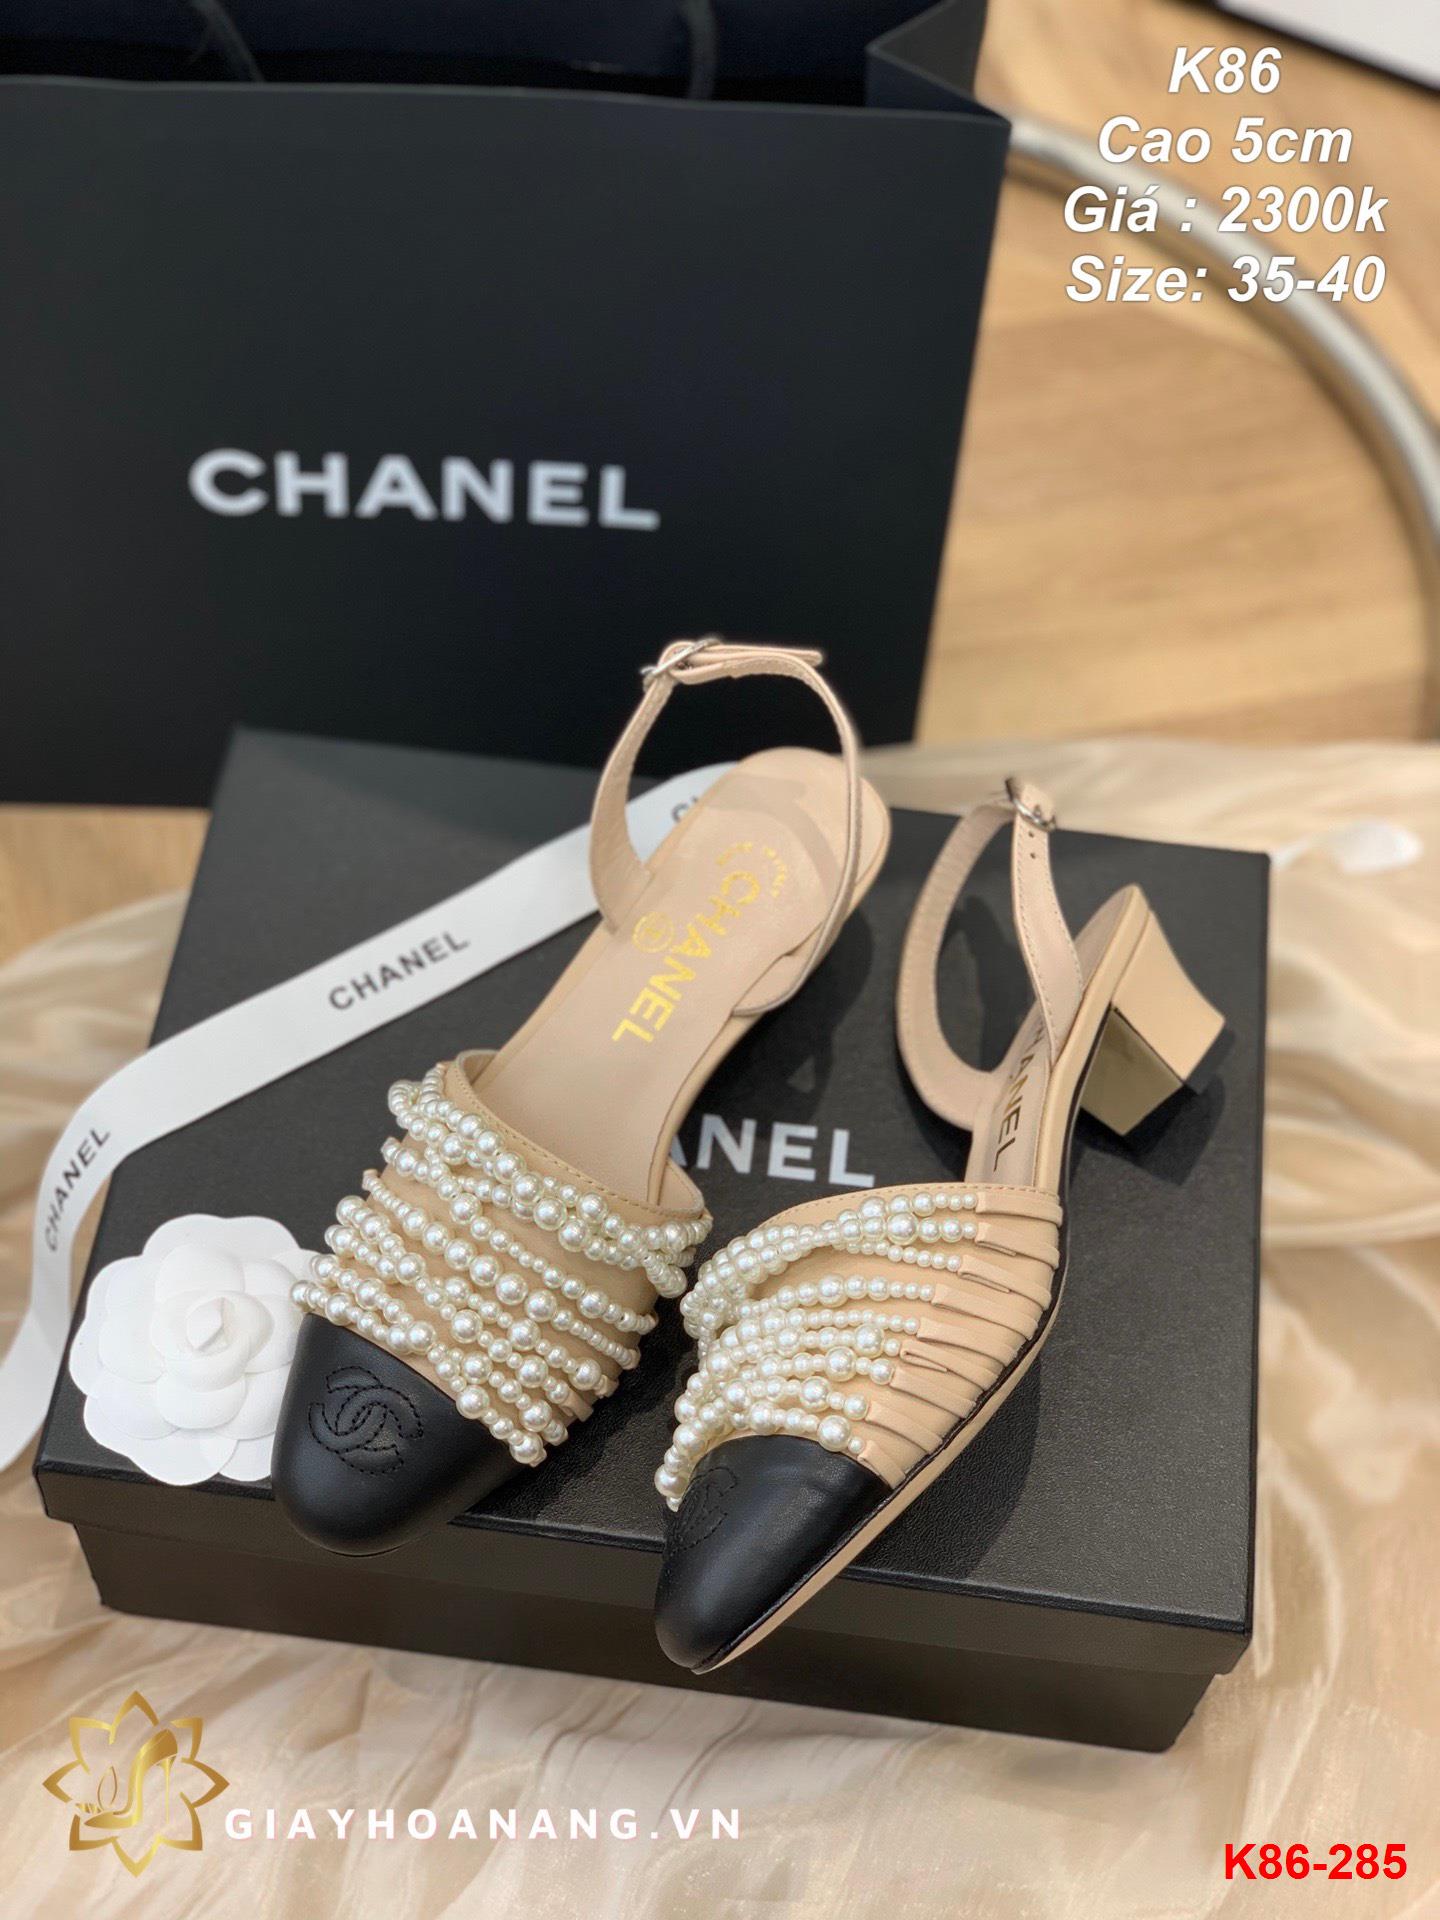 K86-285 Chanel sandal cao 5cm siêu cấp